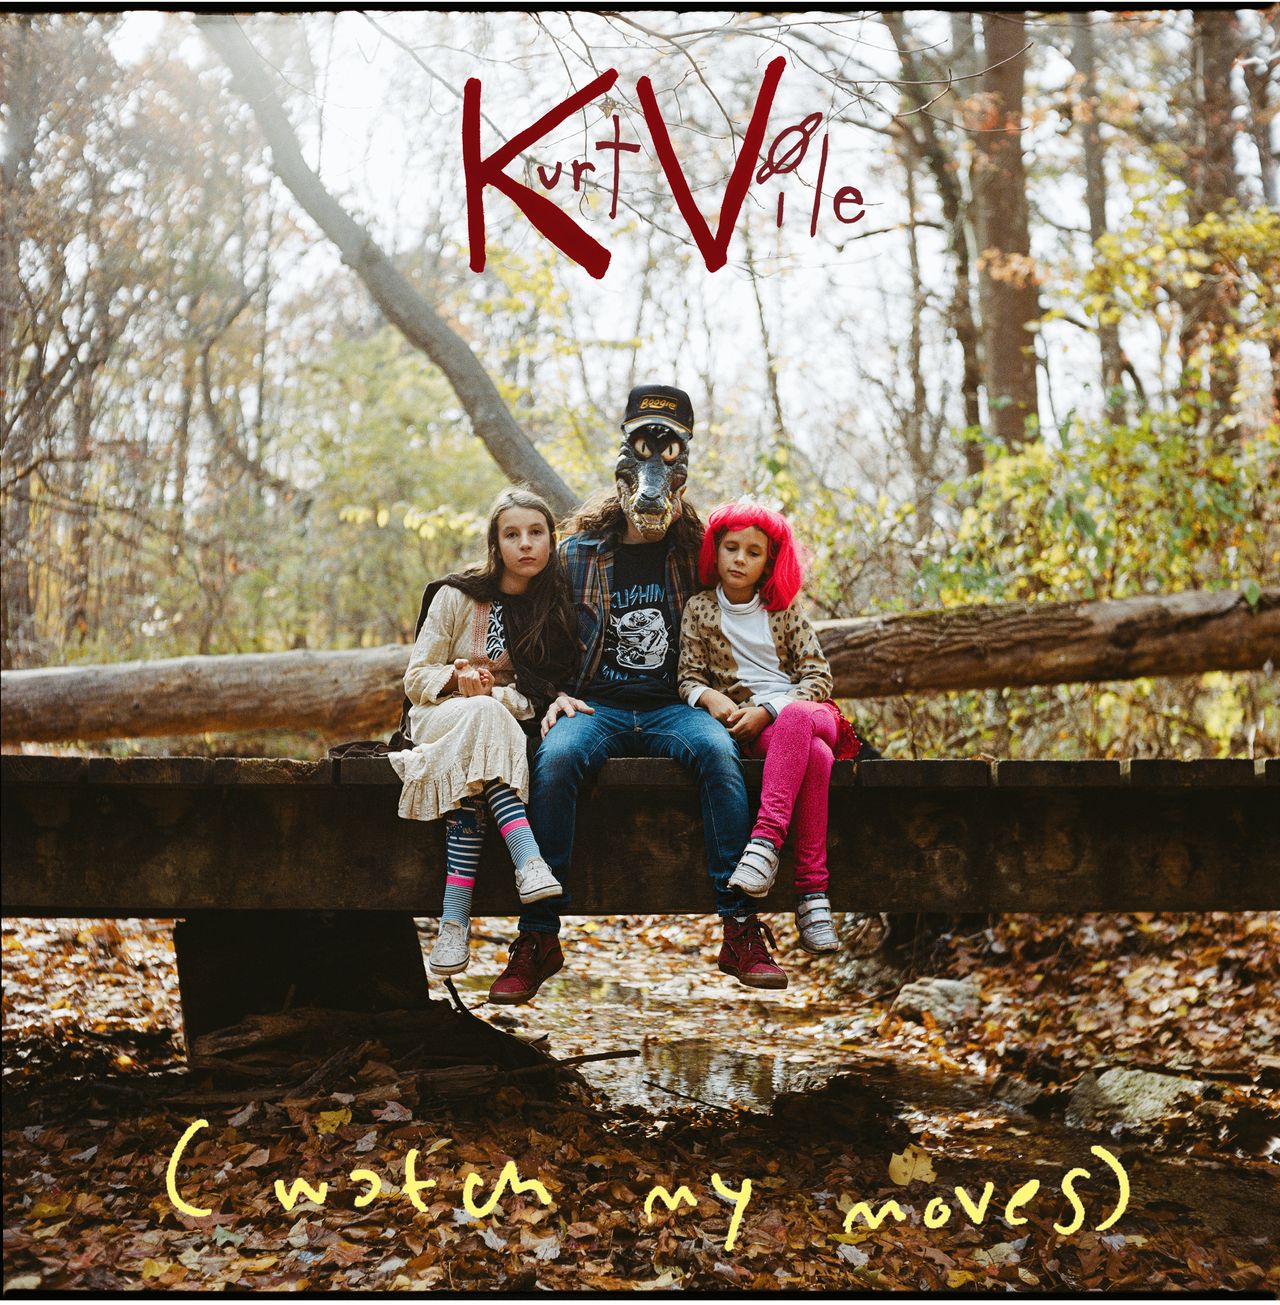 Kurt Vile Album "(watch my moves)"